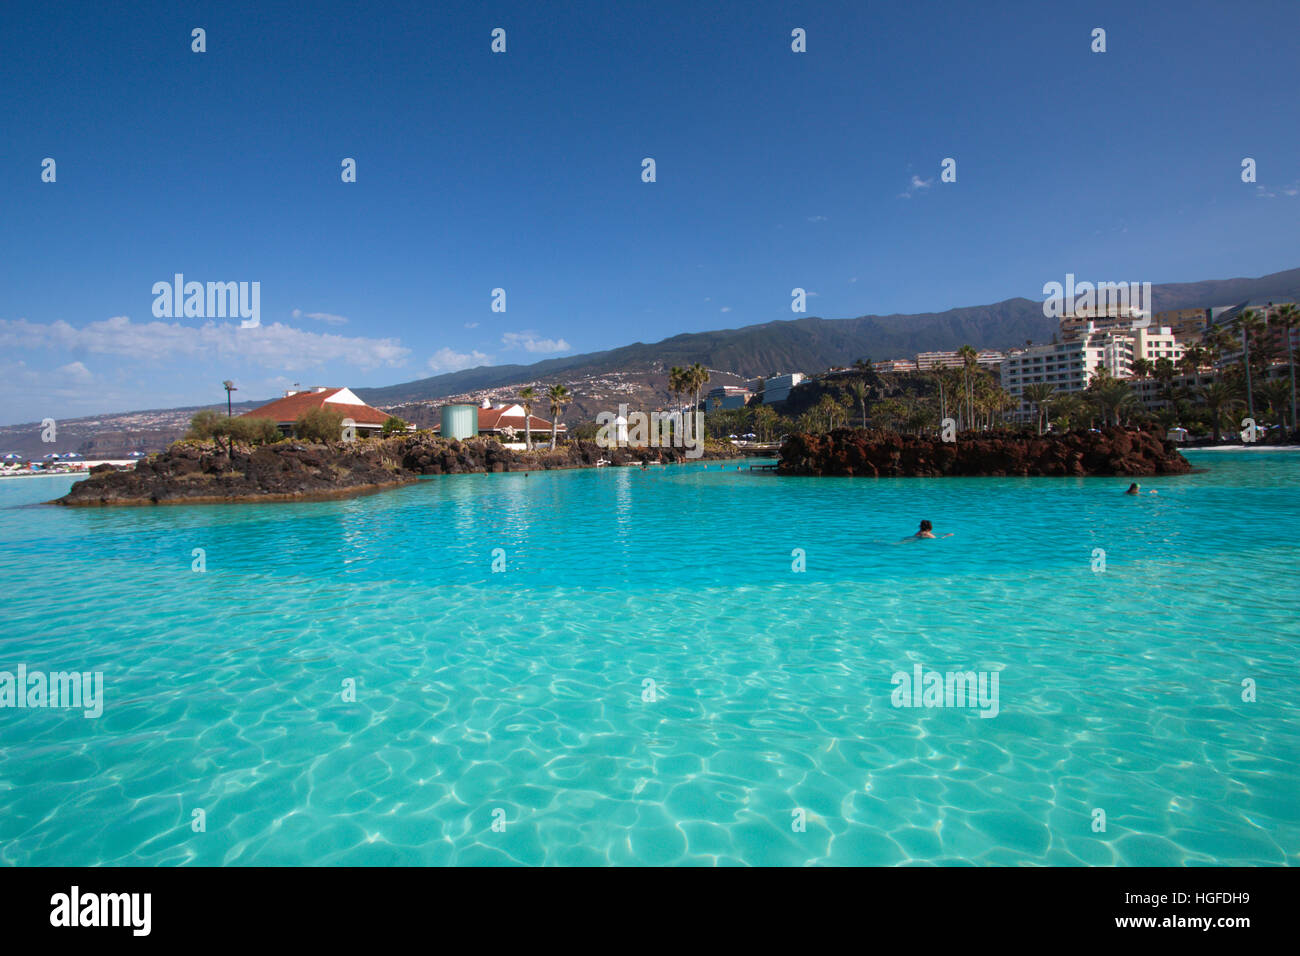 Puerto de la Cruz, Lago Martianez, Swimming pool Stock Photo